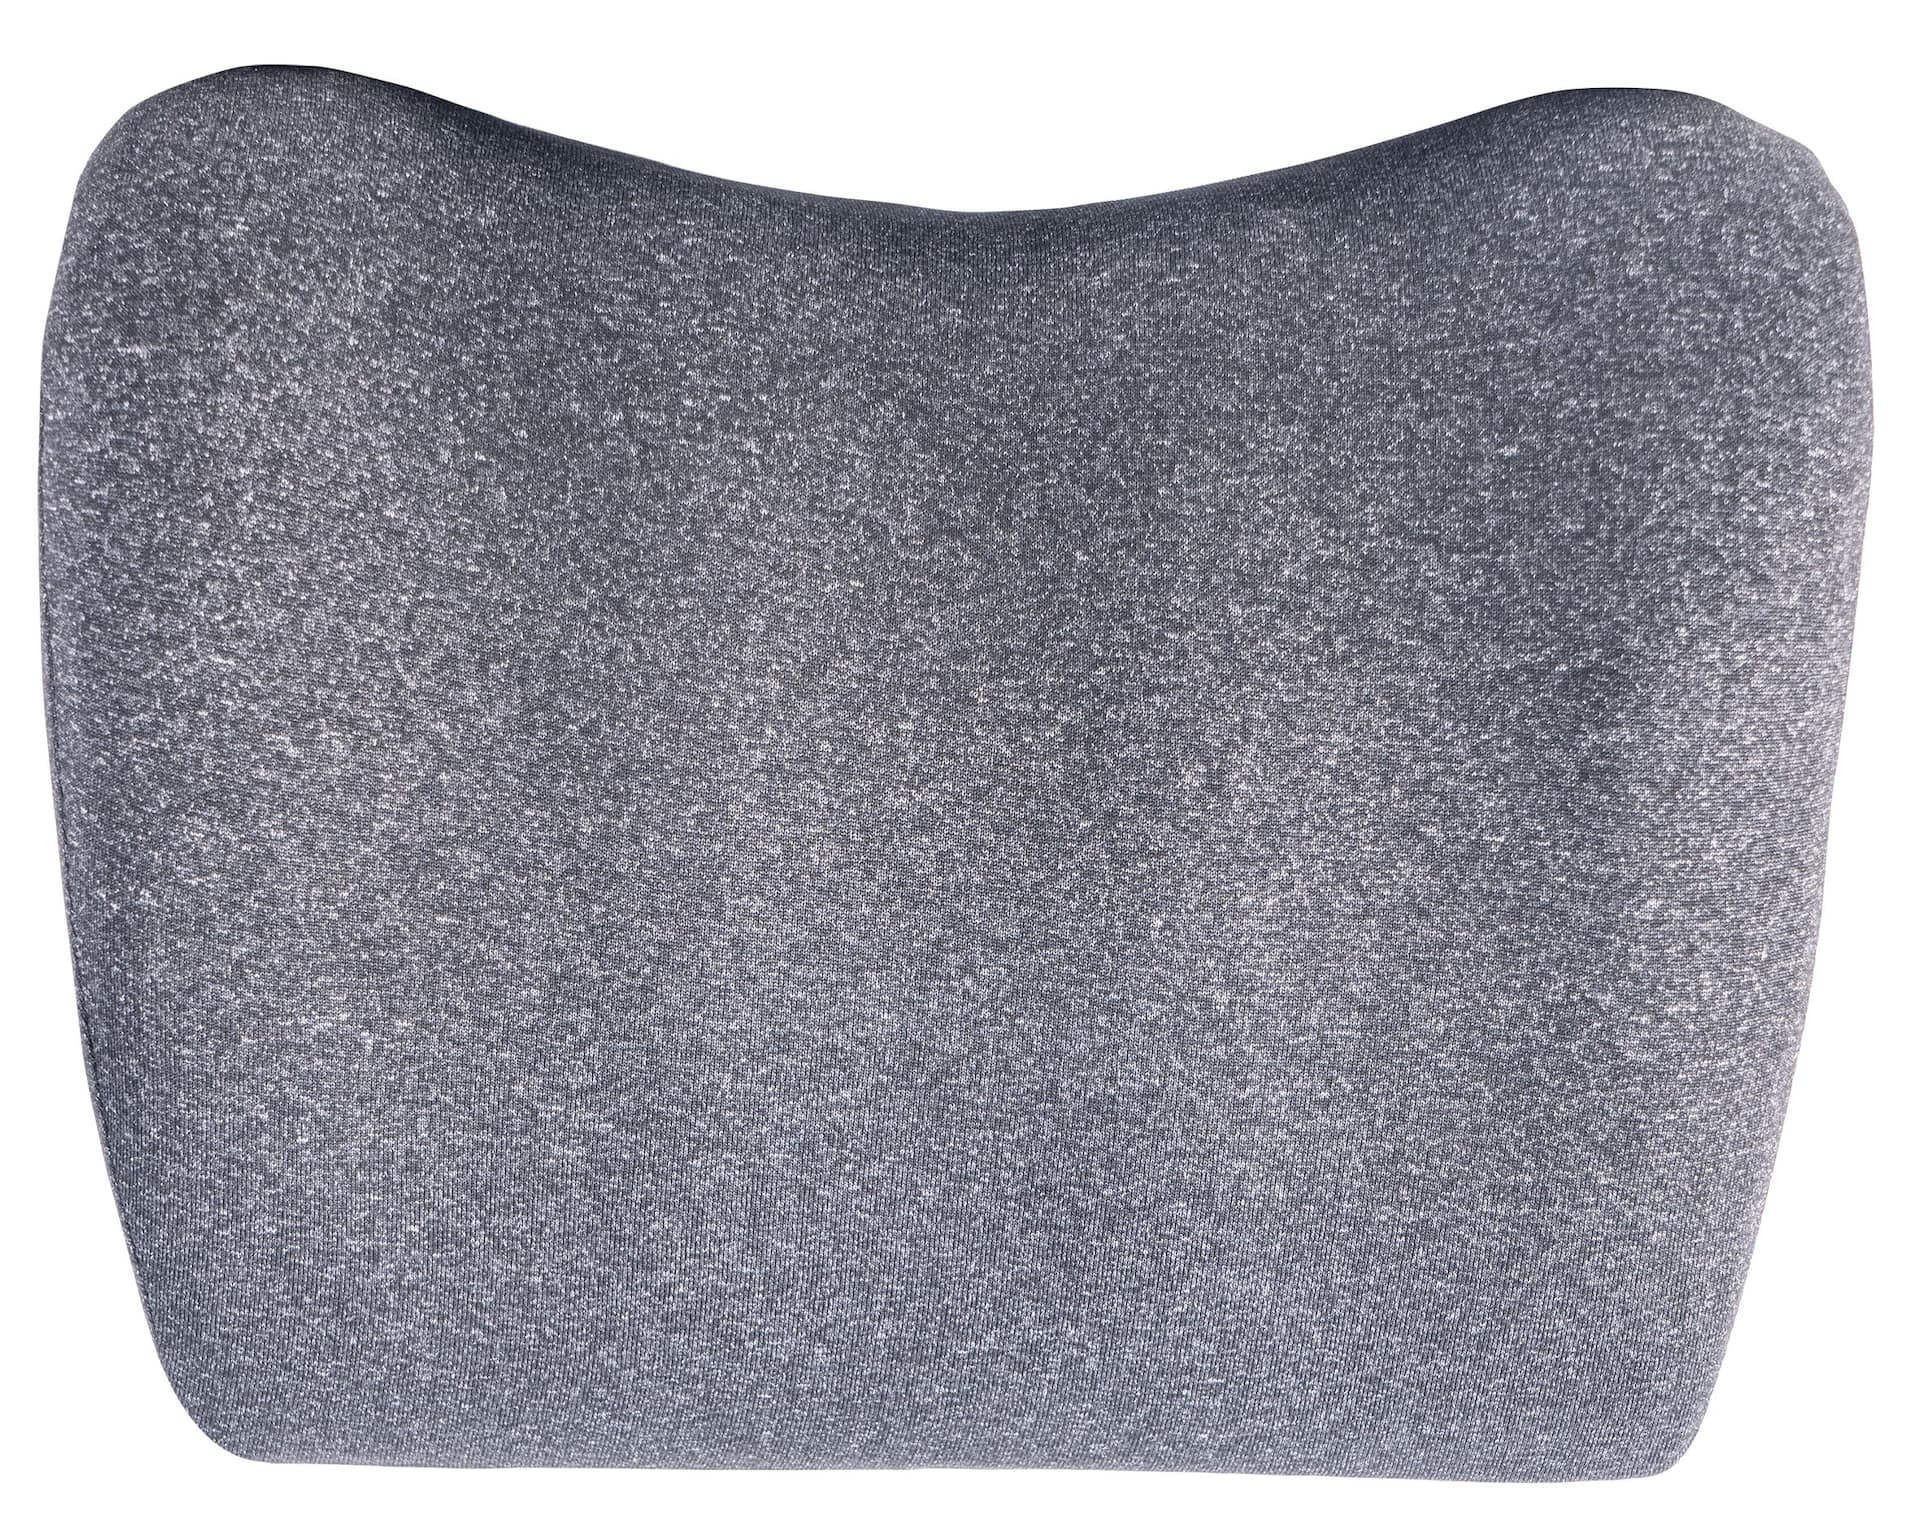 AutoTrends Ergonomic Neck Car Pillow Cushion with Removable Cover